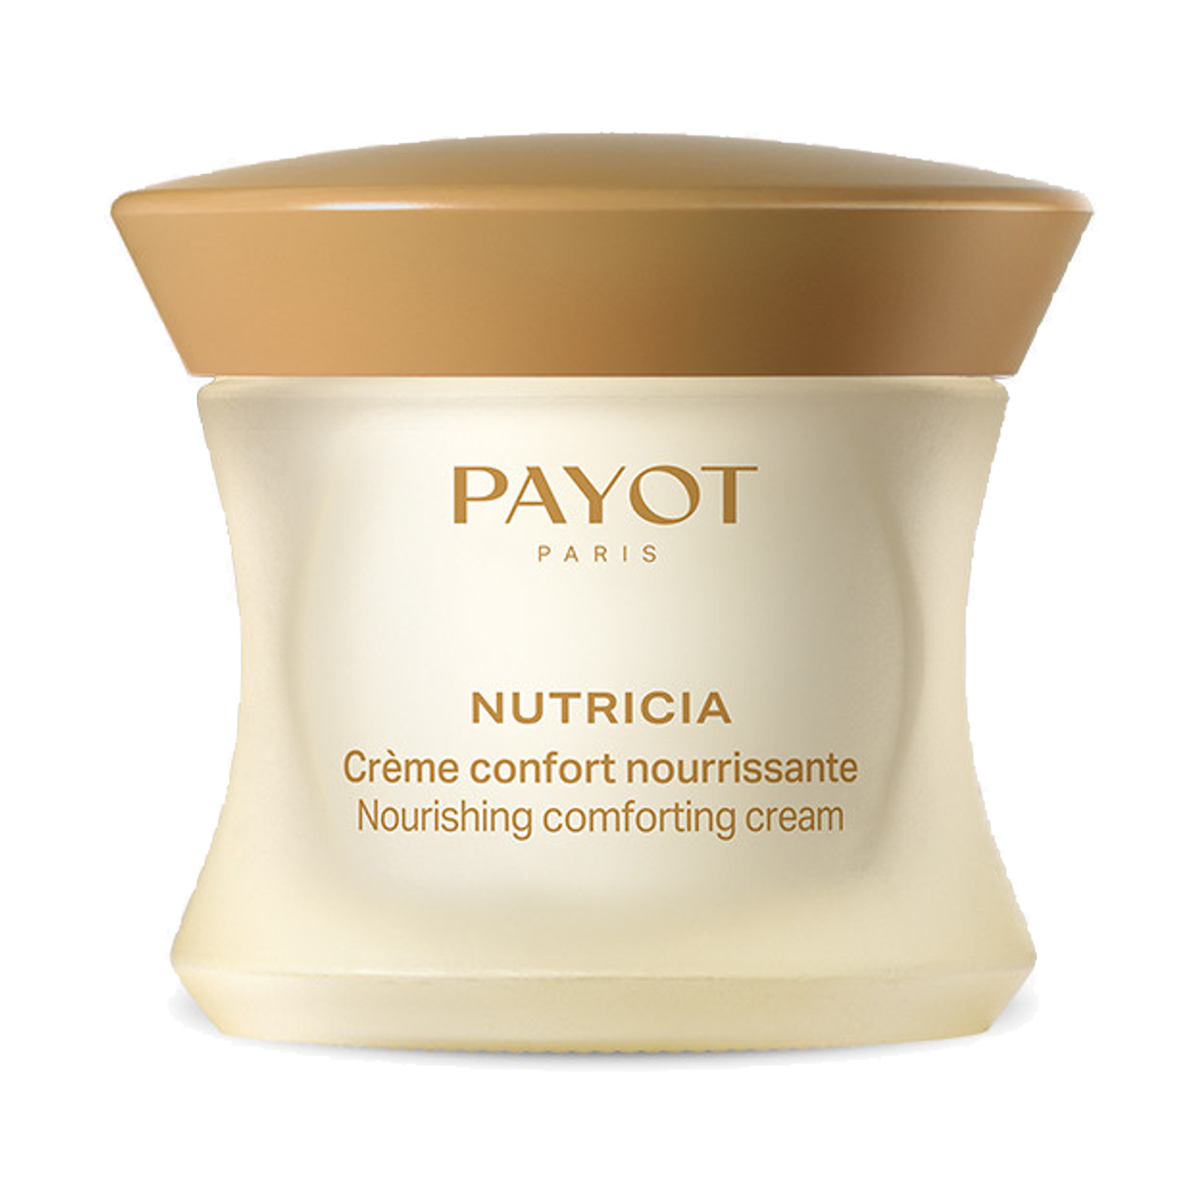 Payot Nutricia Creme Confort Nourissante 50 ml